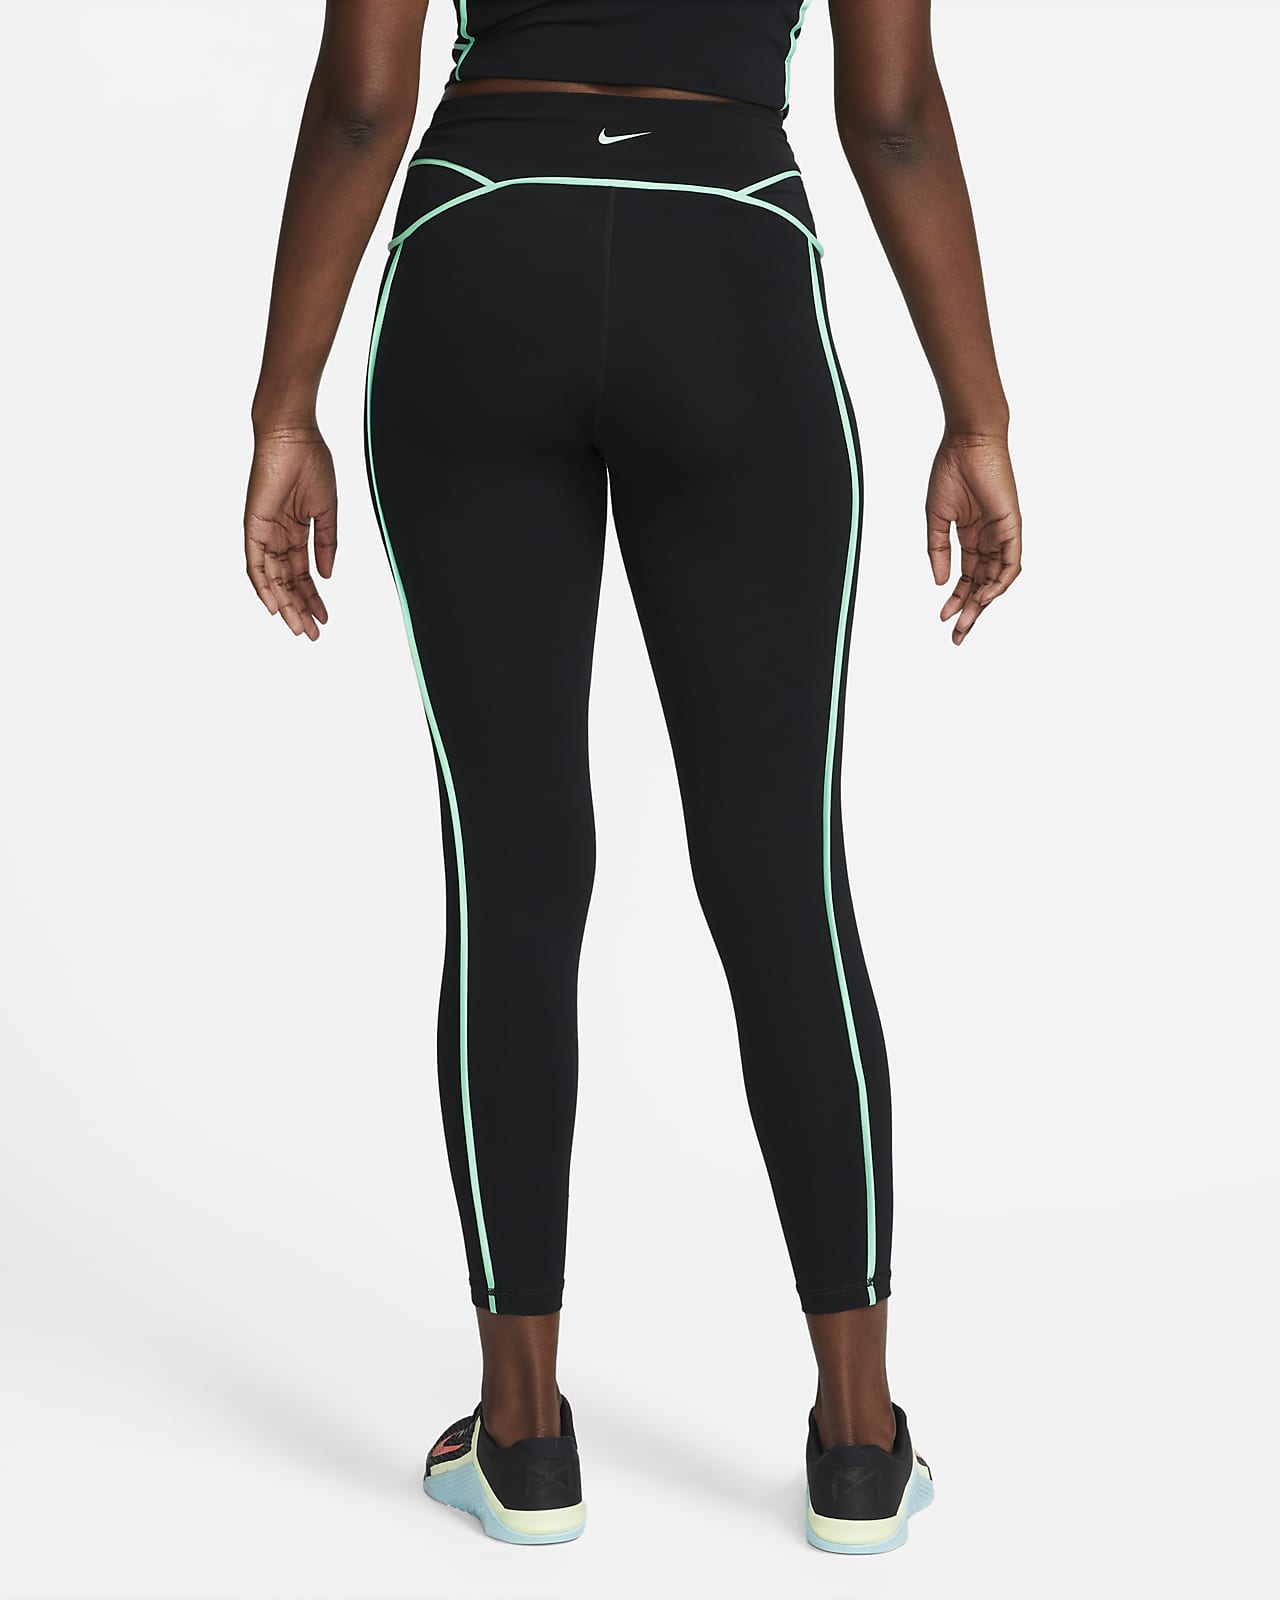 Nike Pro Women's Mid-Rise 7/8 Training Leggings.